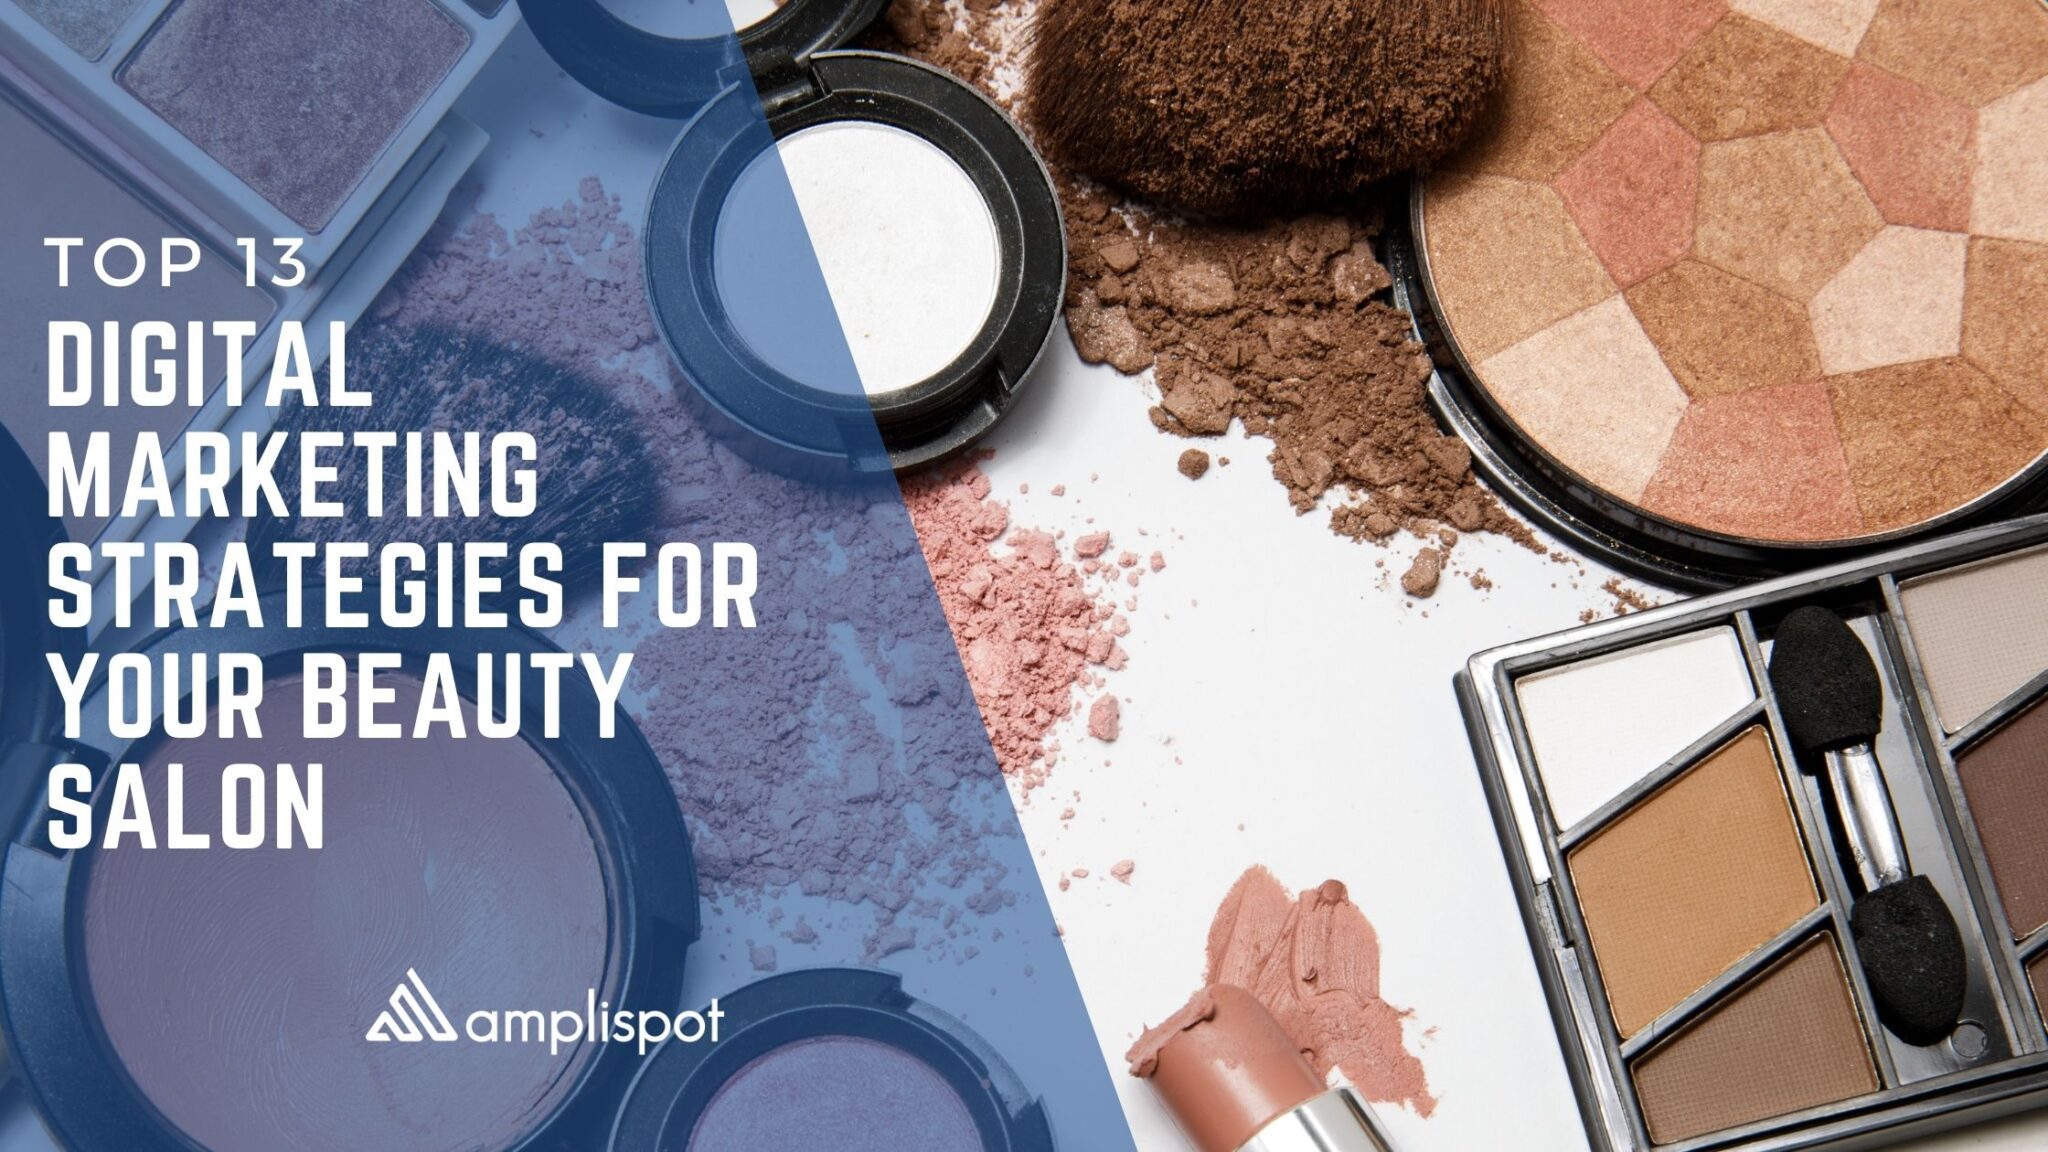 Top 13 Digital Marketing Strategies For Your Beauty Salon | Amplispot